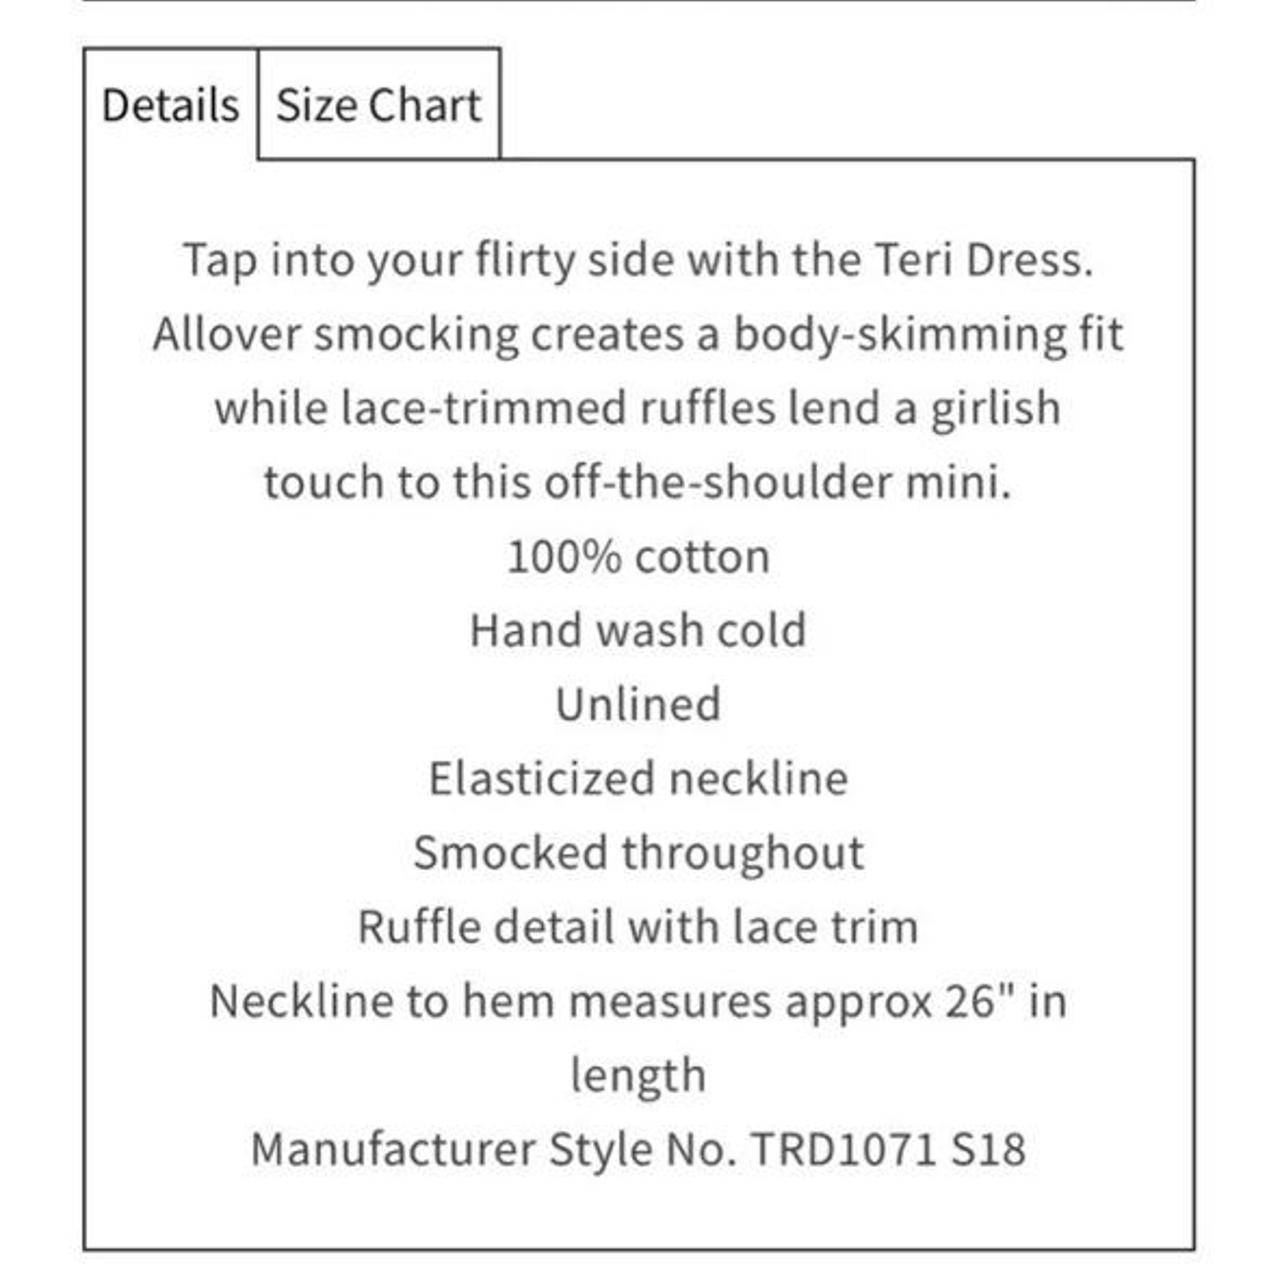 Product Image 4 - Revolve Tularosa Teri Dress
Such a